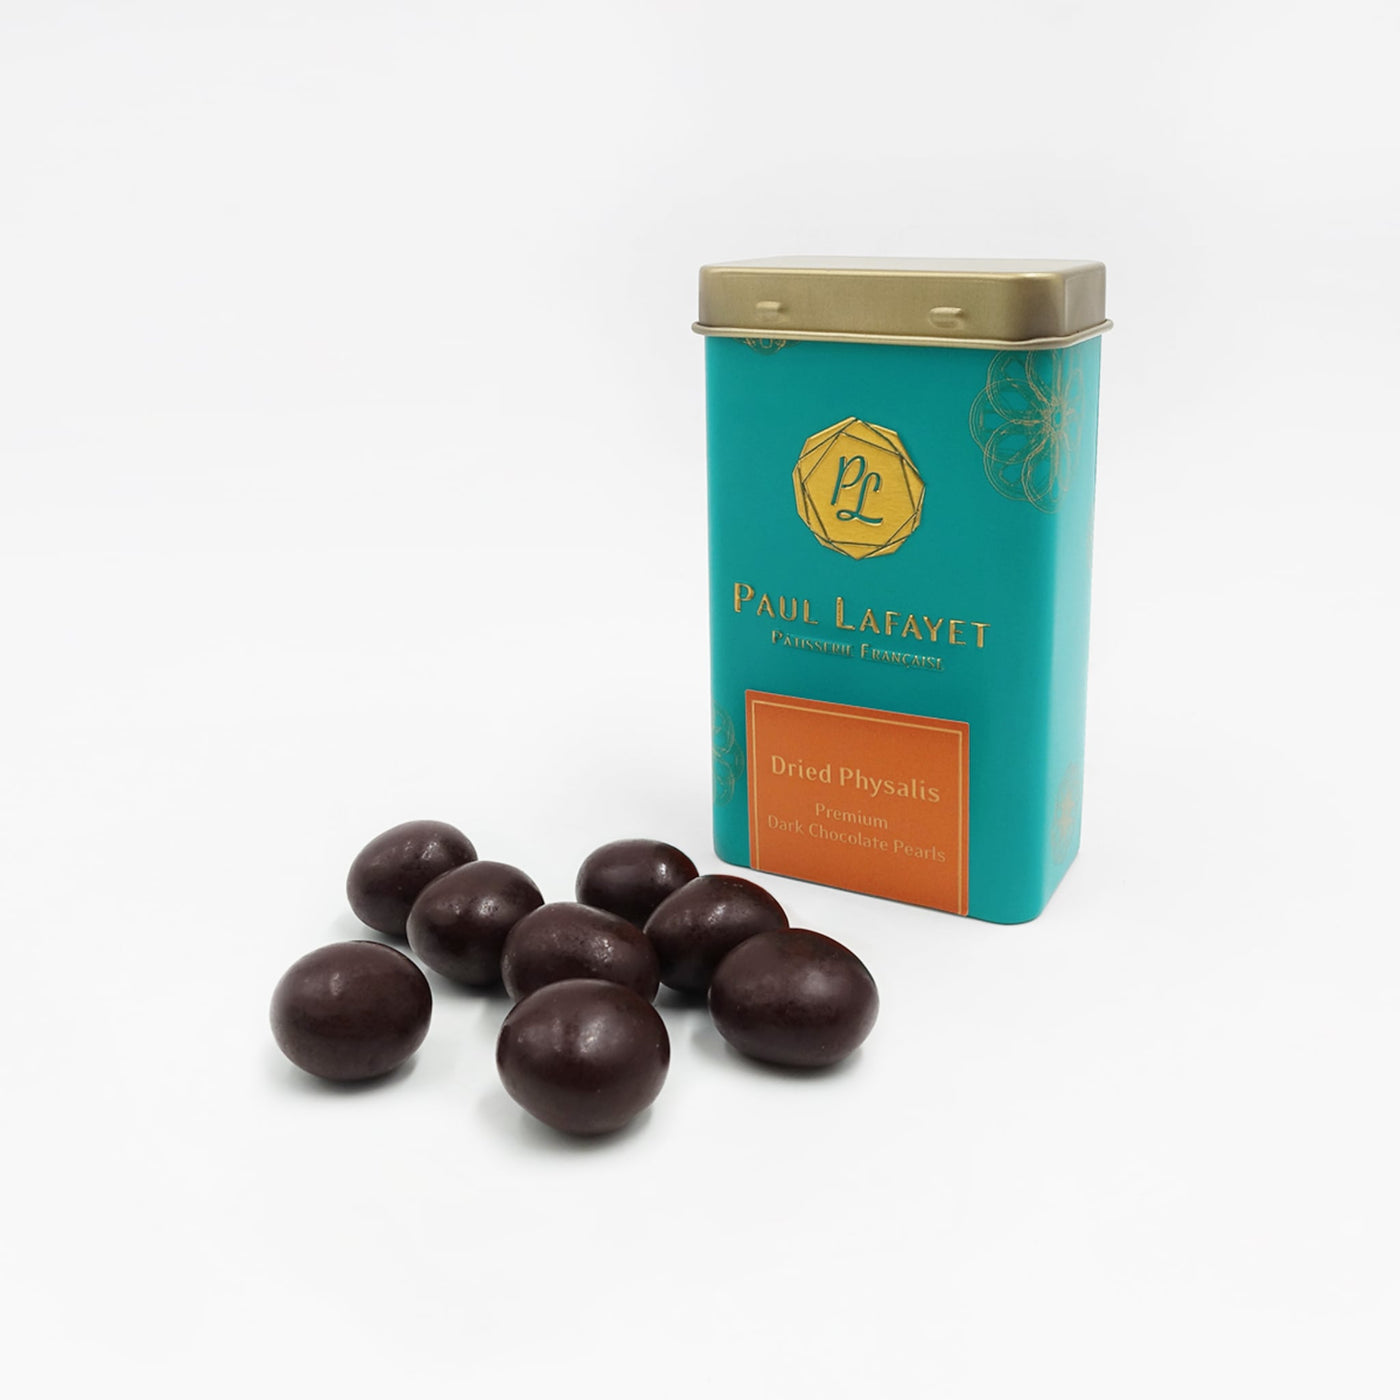 Premium Dark Chocolate Pearls - Dried Physalis